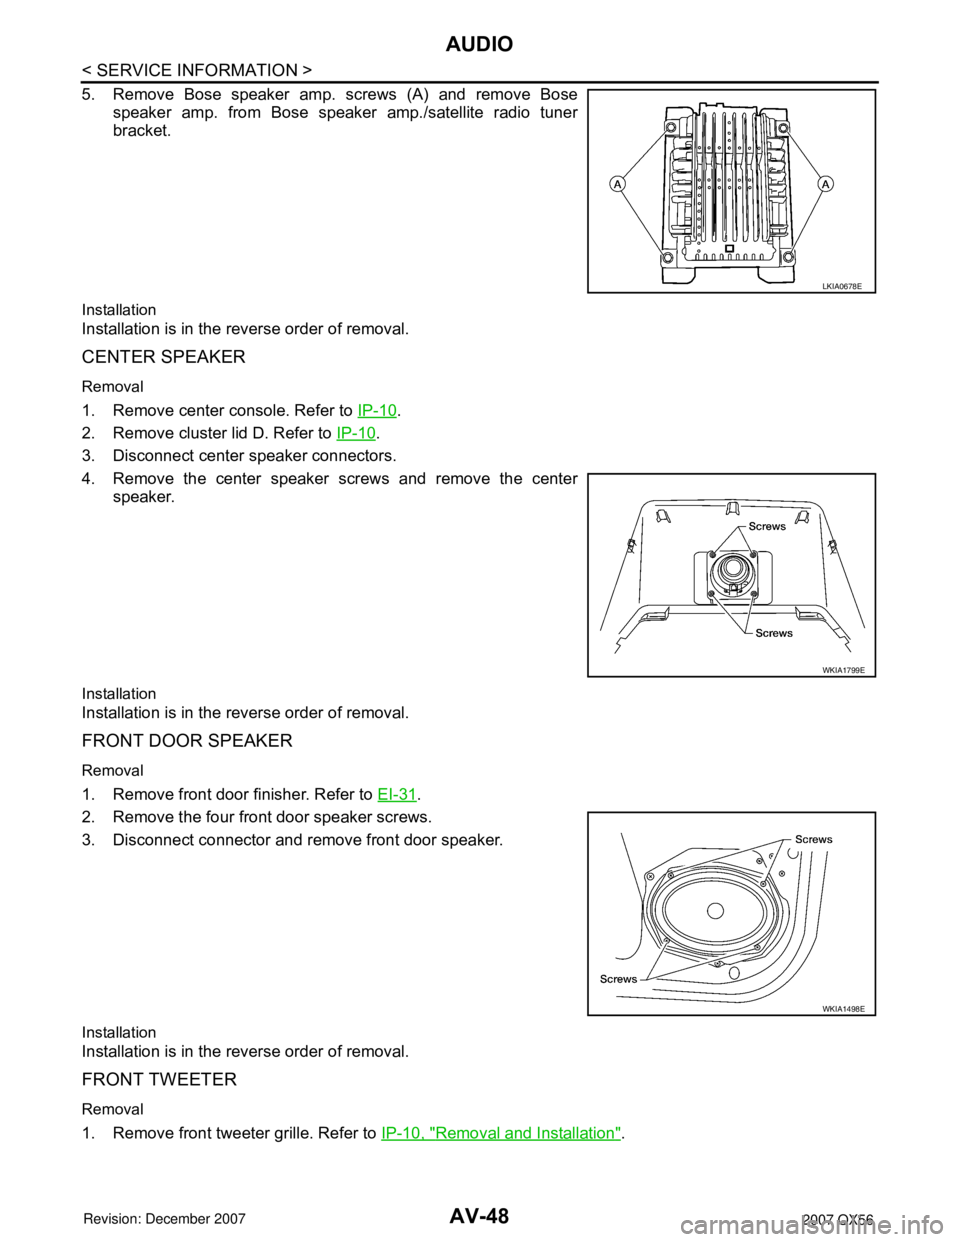 INFINITI QX56 2007  Factory Service Manual AV-48
< SERVICE INFORMATION >
AUDIO
5. Remove Bose speaker amp. screws (A) and remove Bose
speaker amp. from Bose speaker amp./satellite radio tuner
bracket.
Installation
Installation is in the revers